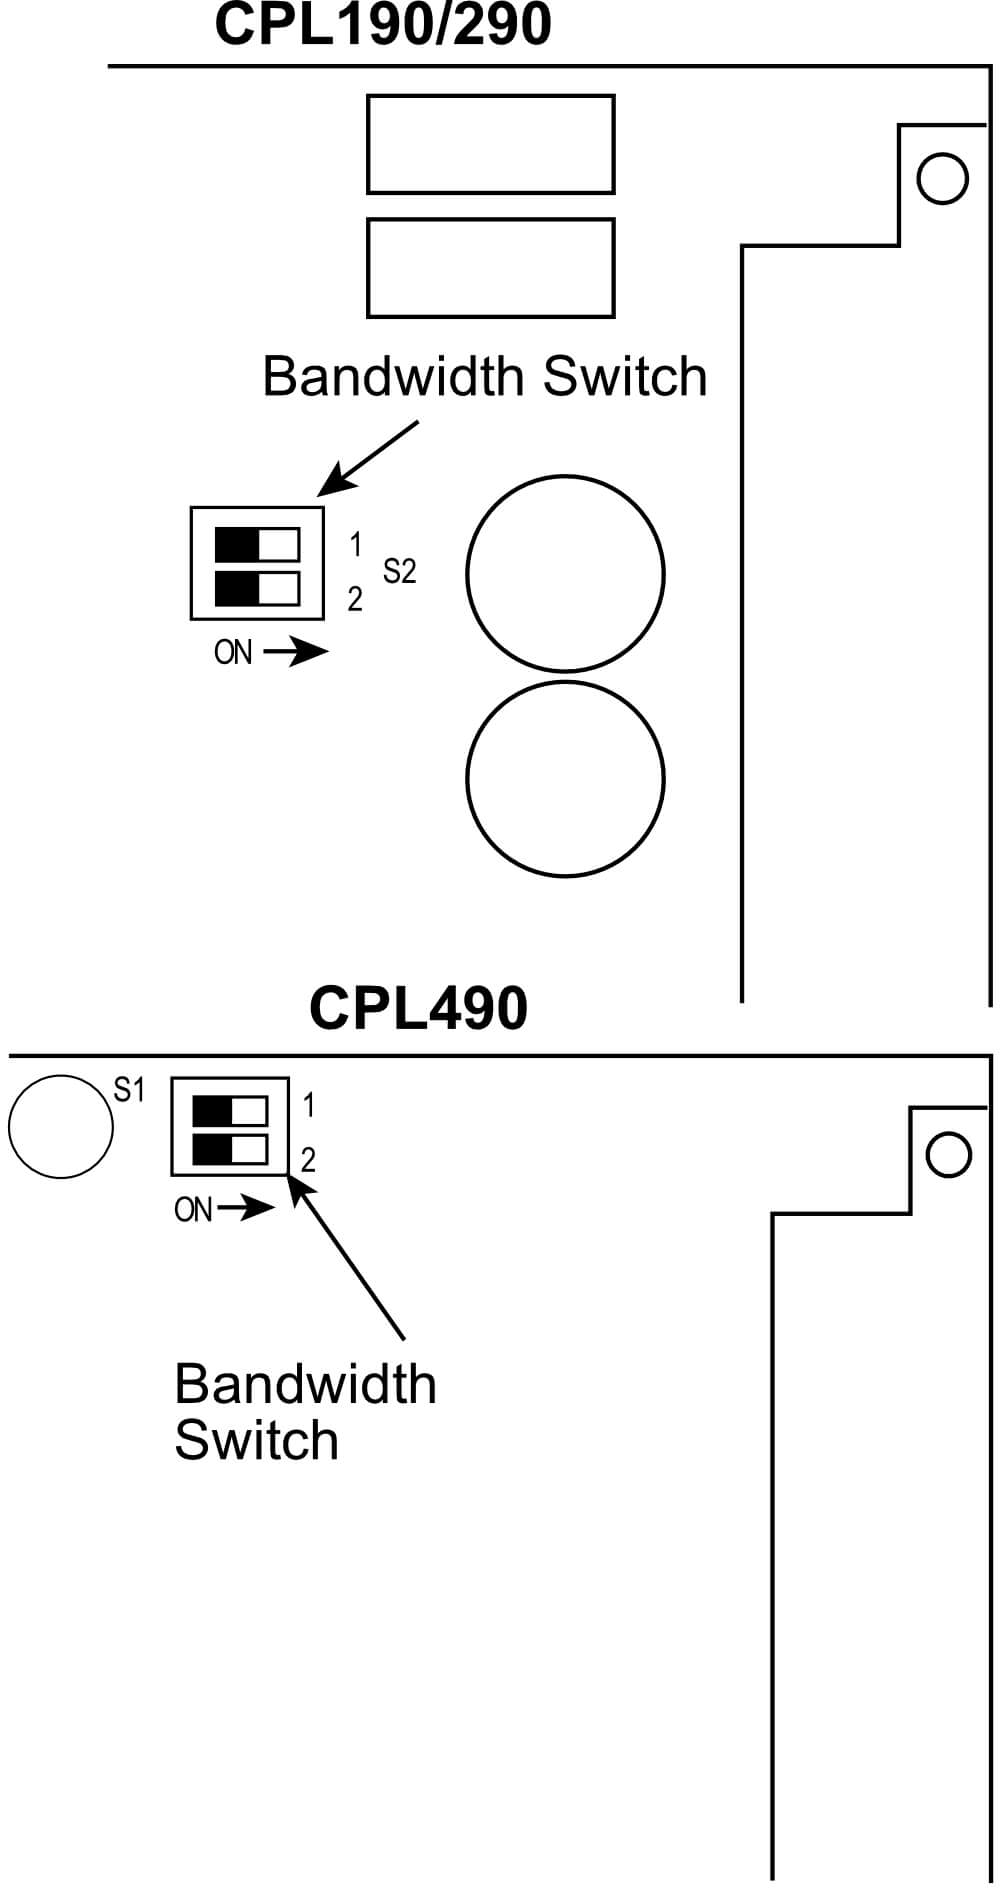 Changing CPL190/290/490 Bandwidth Settings